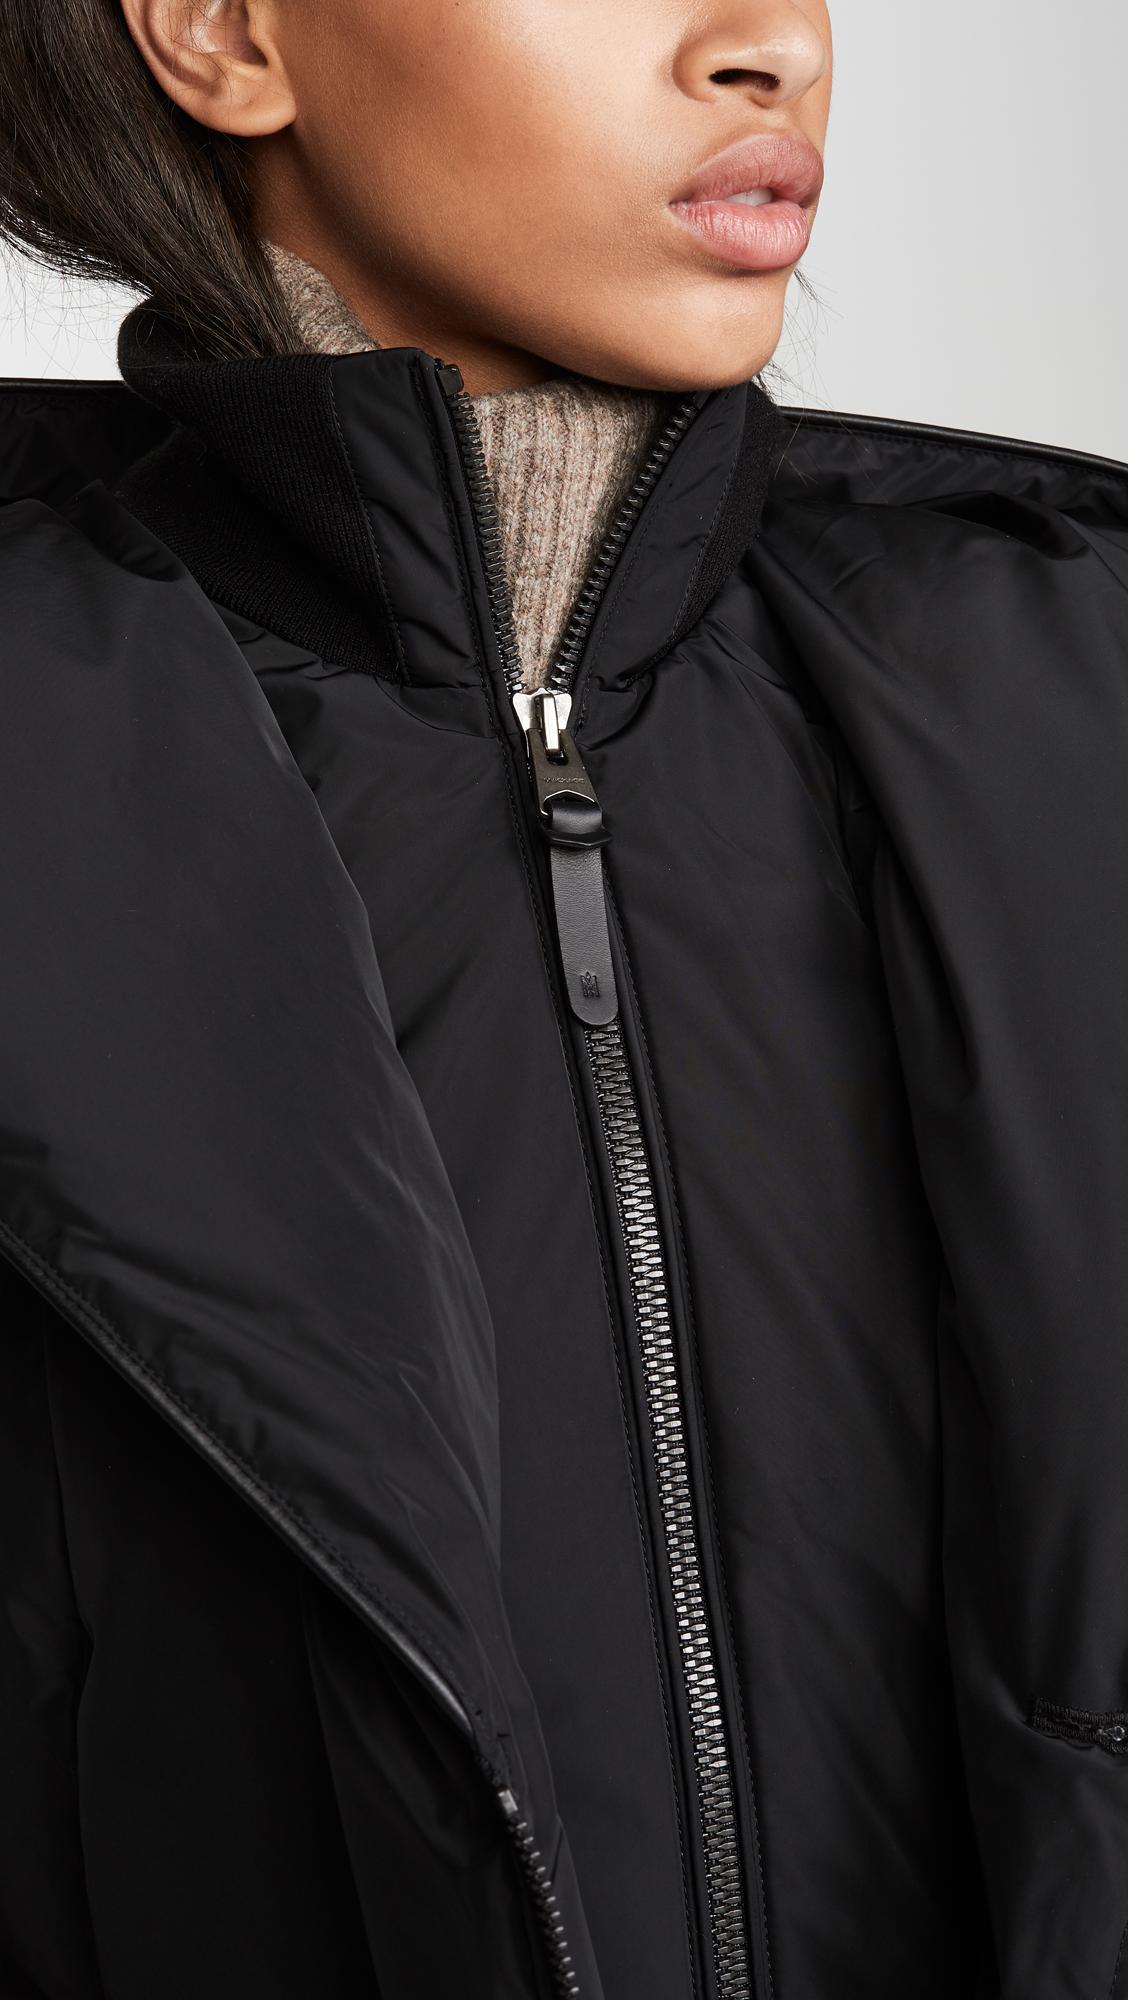 Mackage Leather Kay Jacket in Black - Lyst